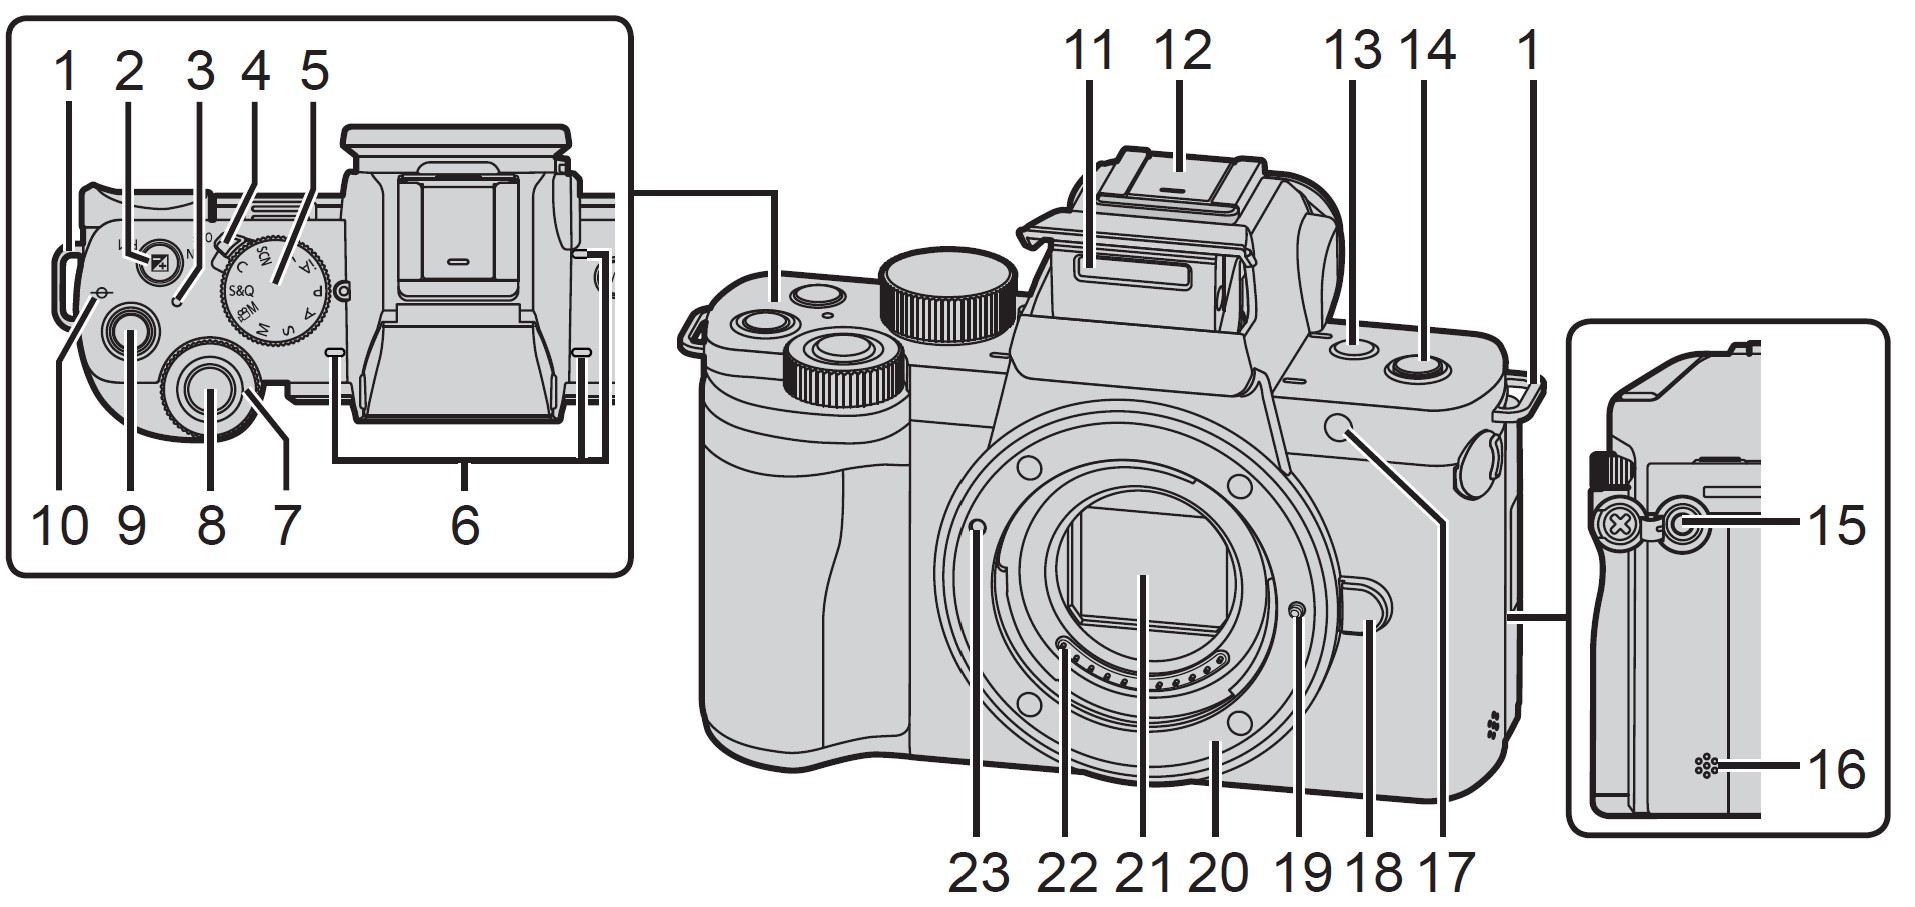 Panasonic-LUMIX-G100-4k-Mirrorless-Camera-Owner-Manual-7